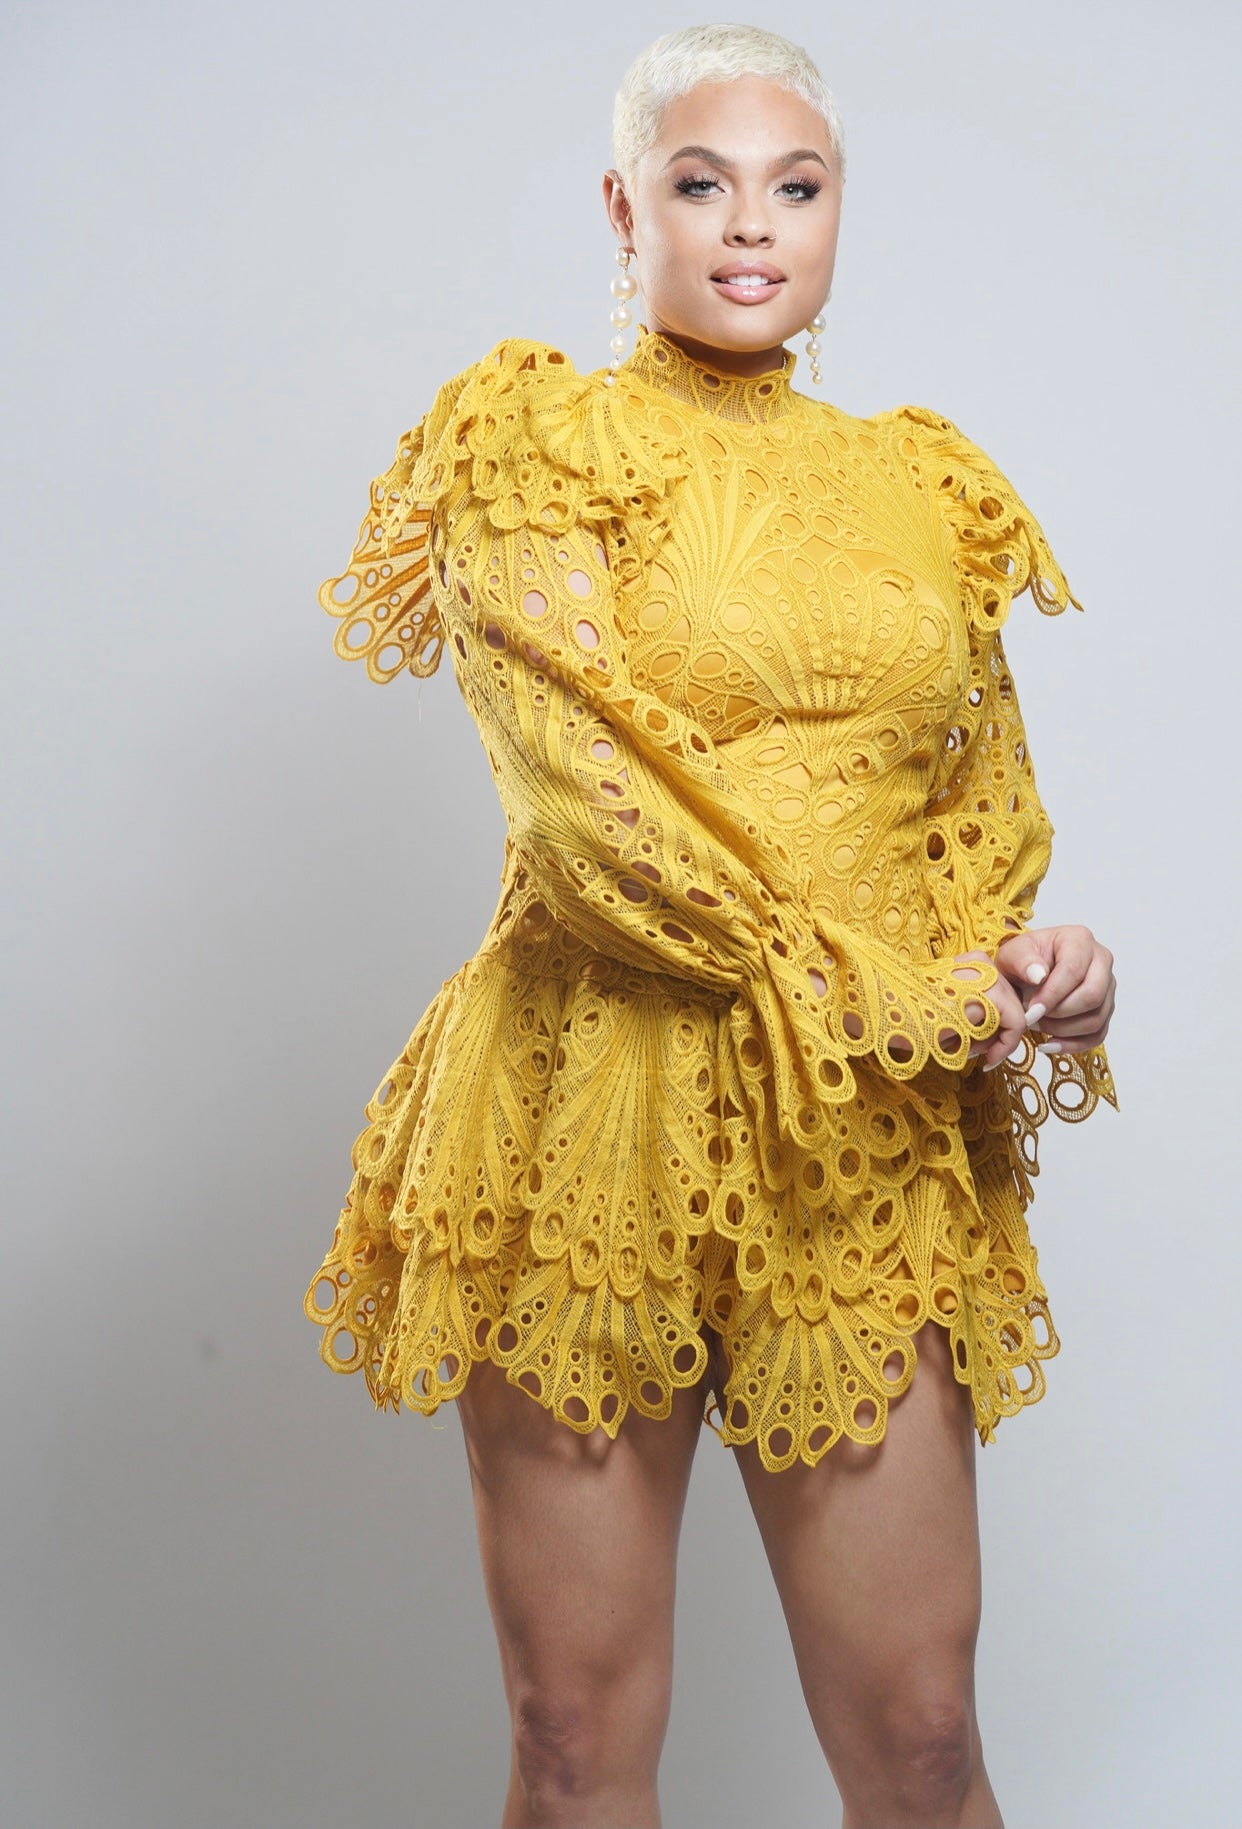 Crochet Lace Dress